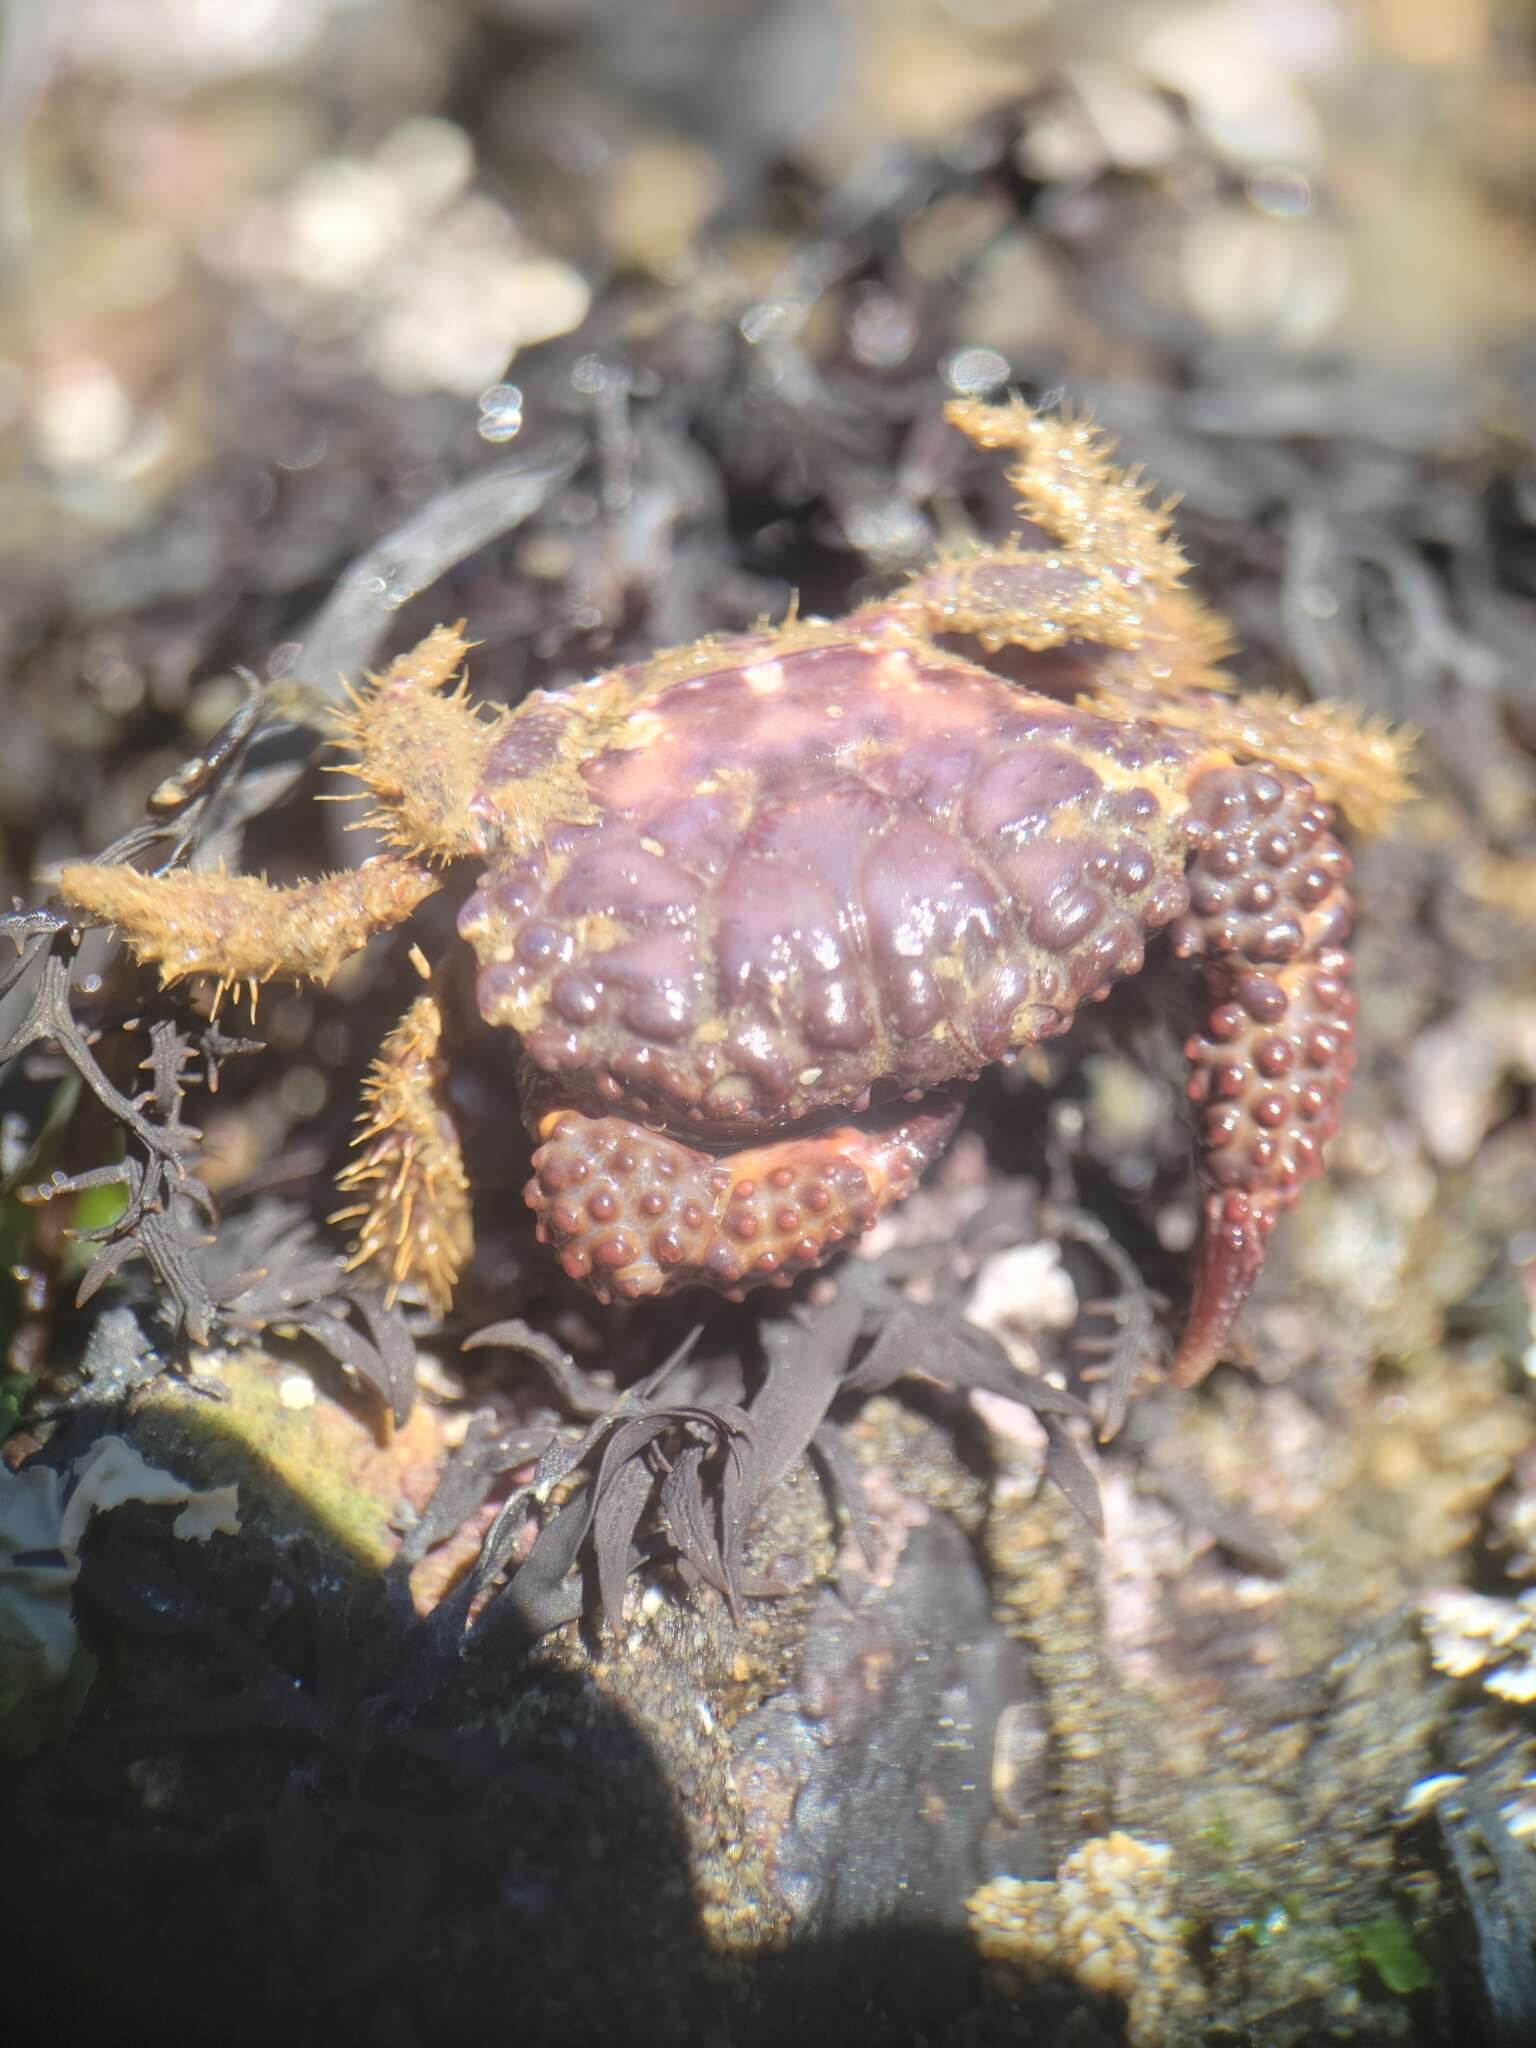 Image of lumpy rubble crab